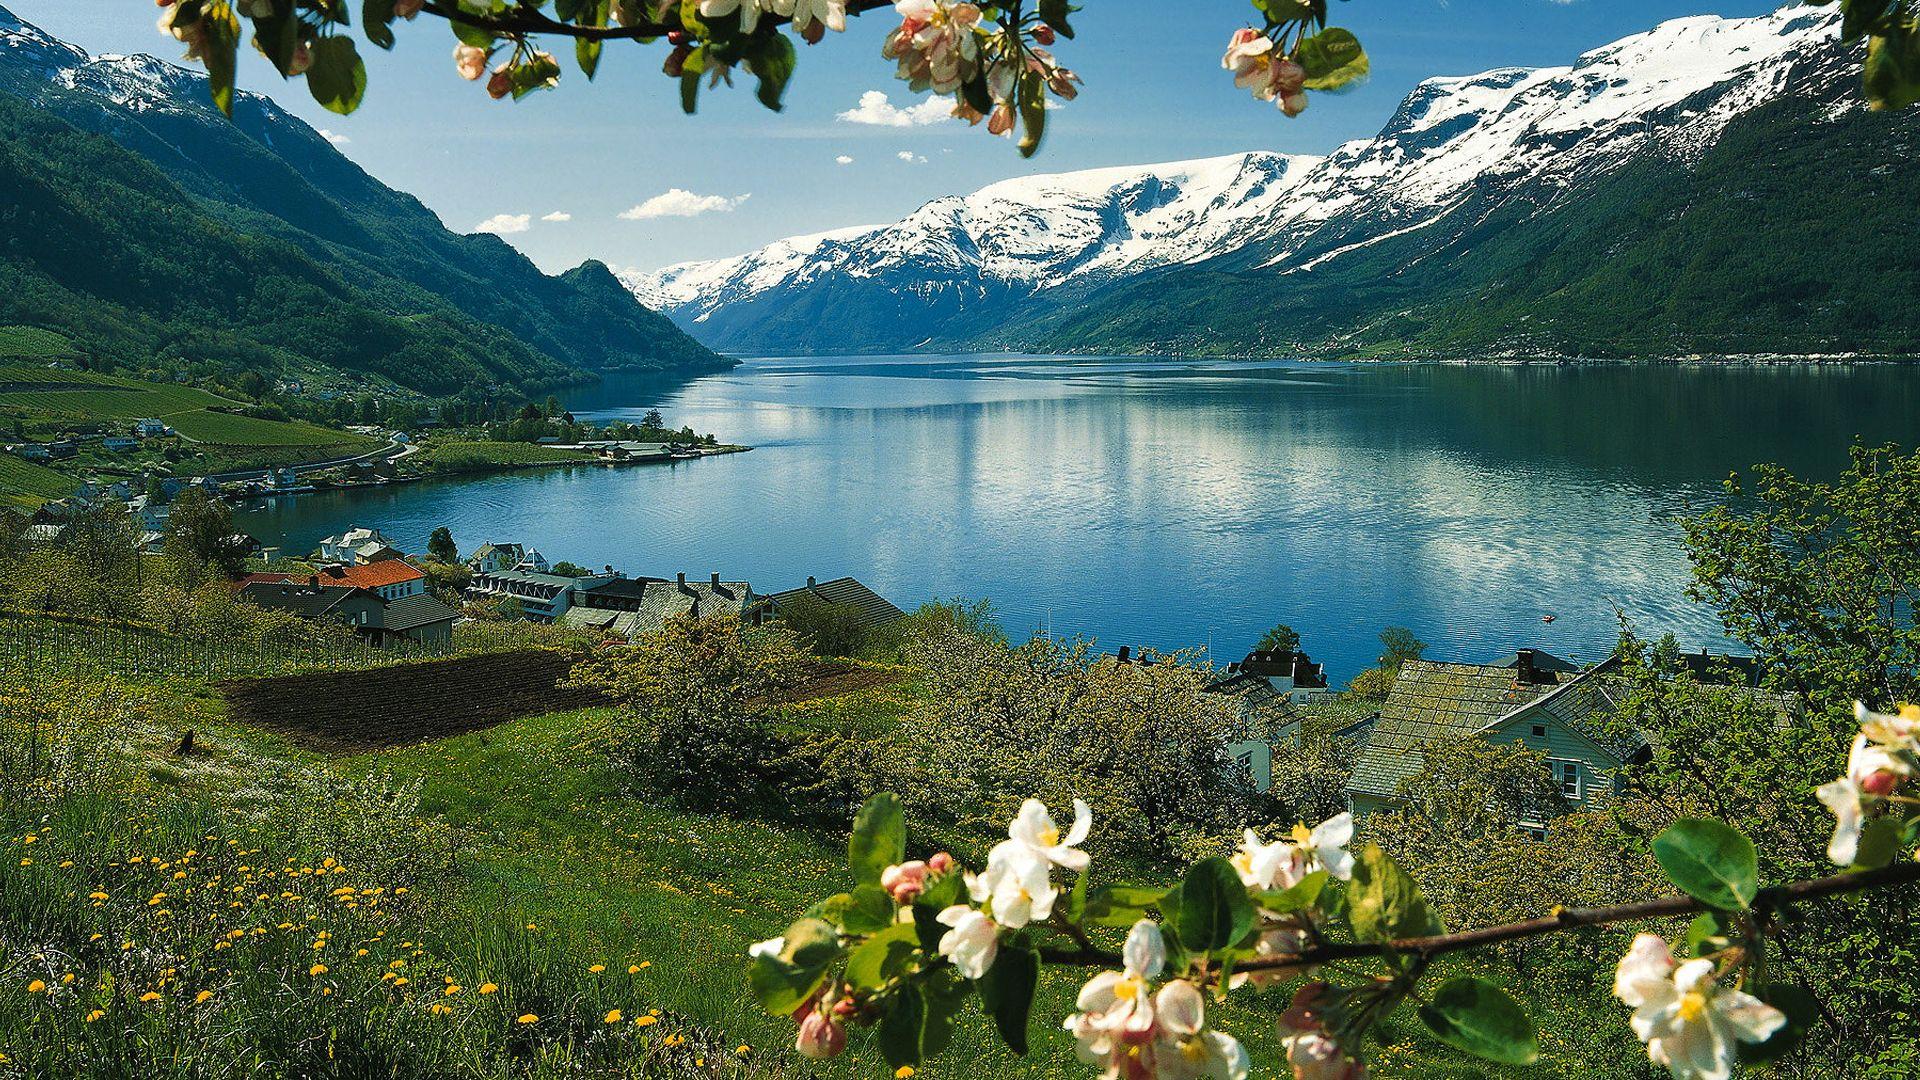 Norway Lake 1920×1080 16:9. Wide Screen Wallpaper 1080p, 2K, 4K